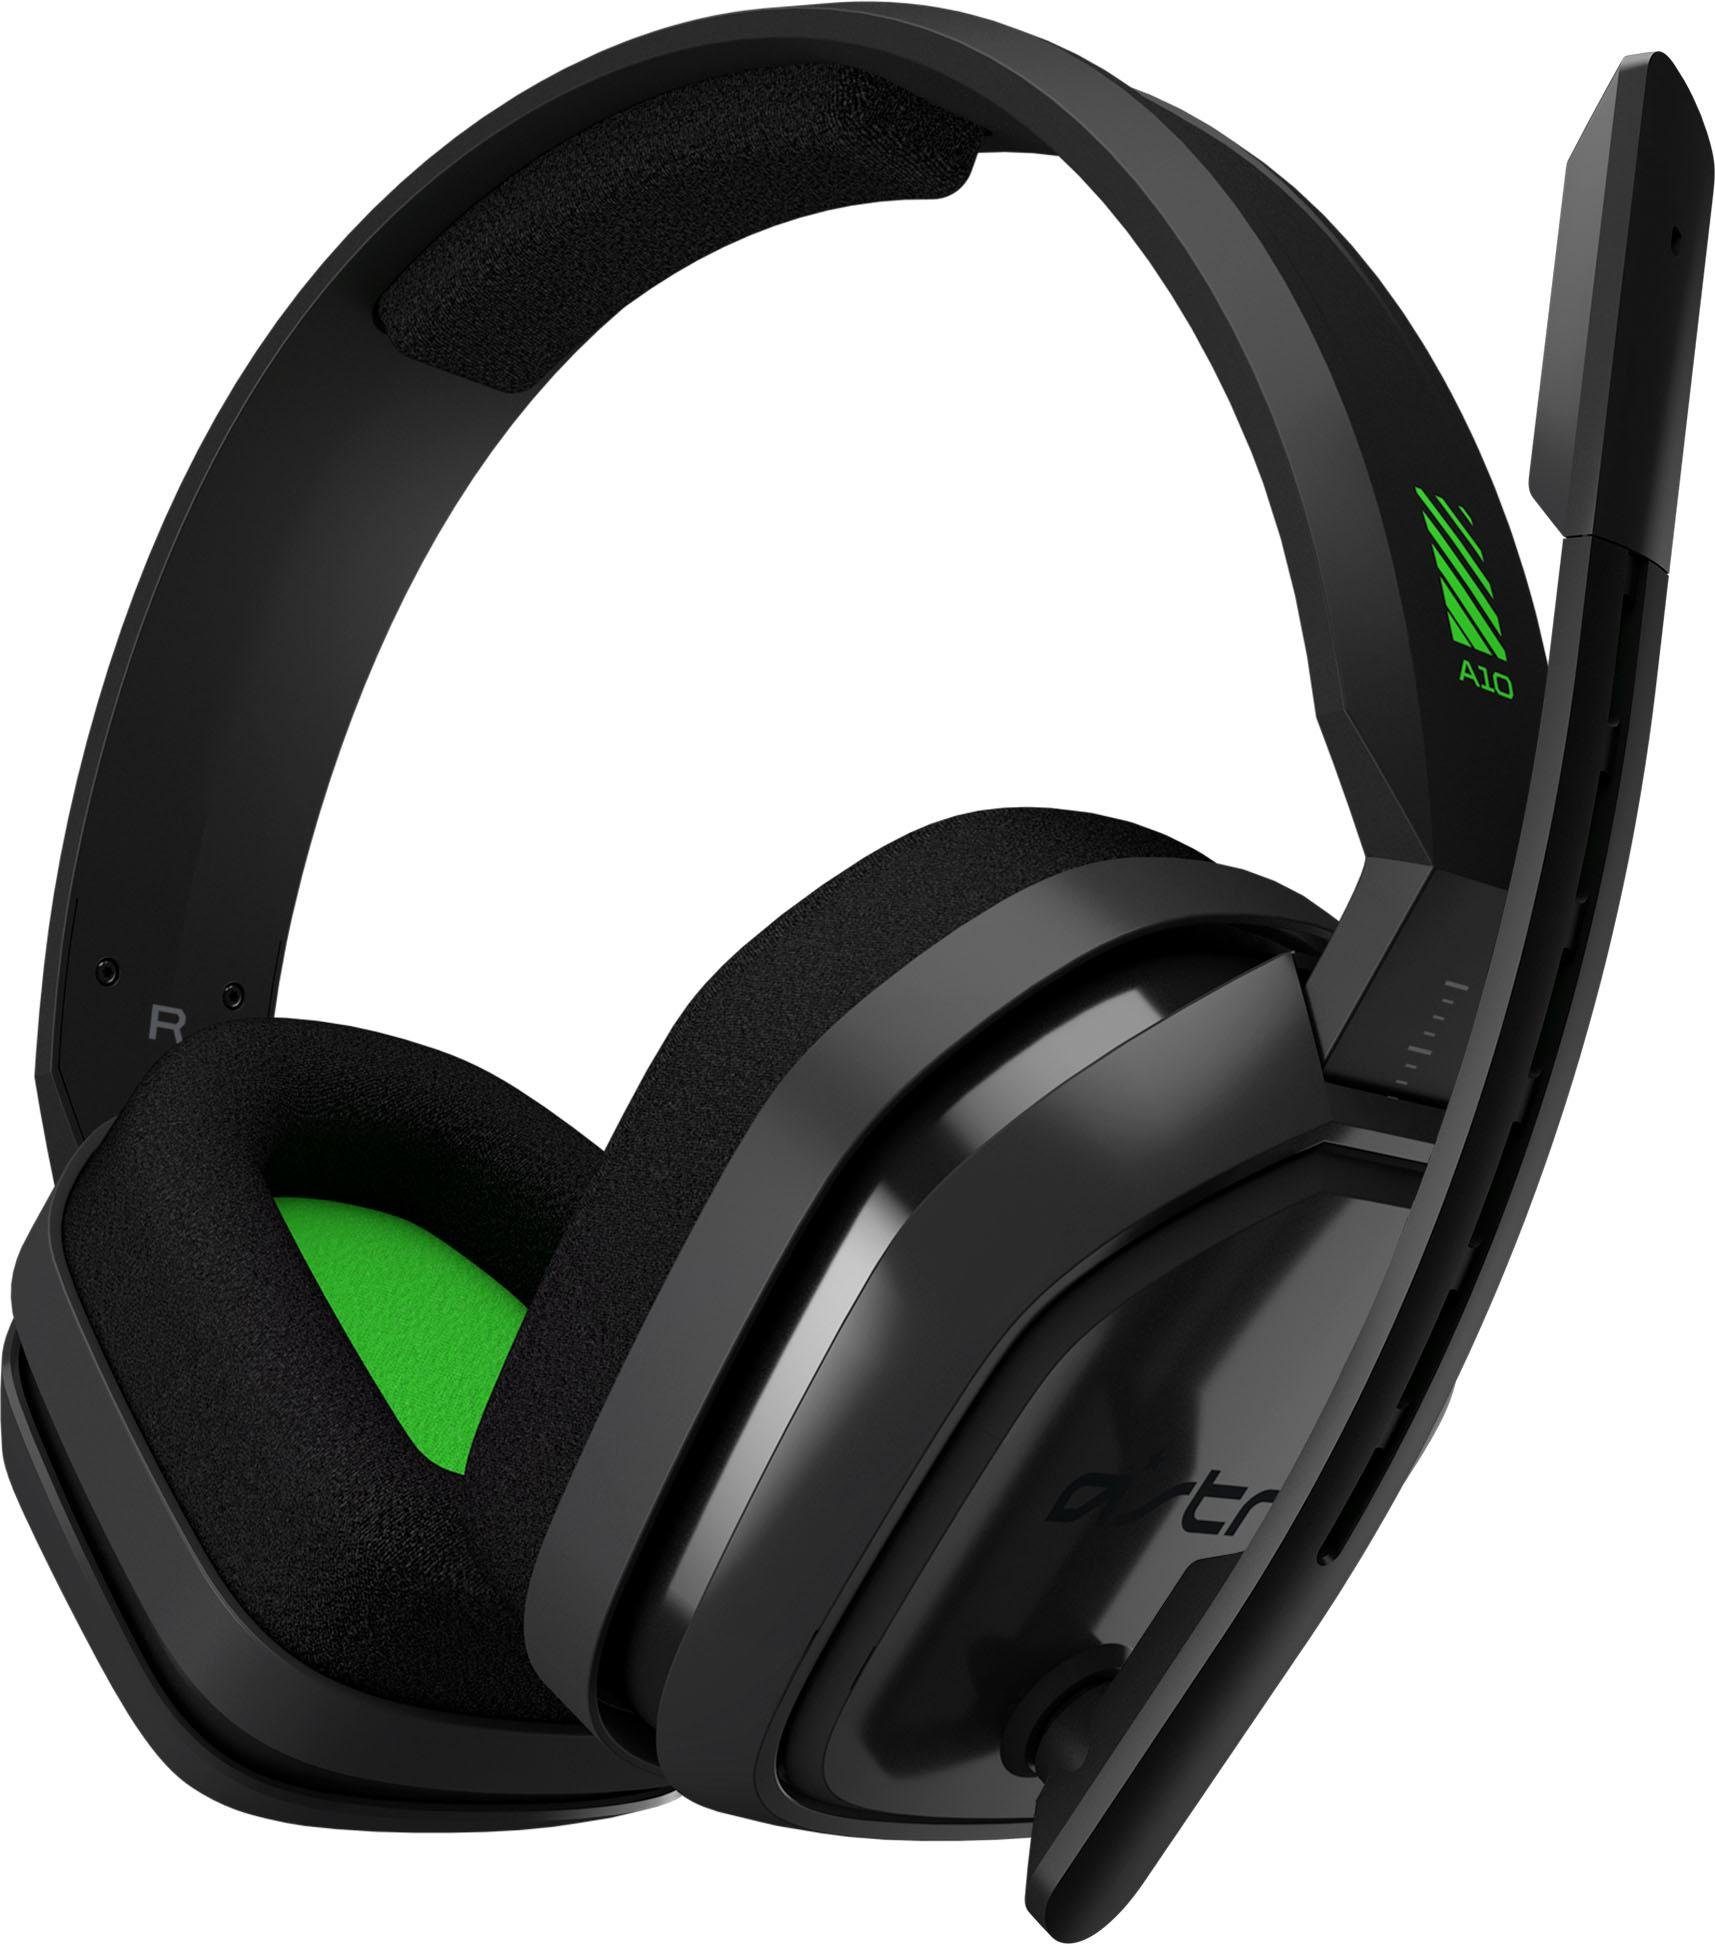 ASTRO »A10« Gaming-Headset, Geeignet für: Xbox One,PS4, PC, MAC, Mobile  online kaufen | OTTO